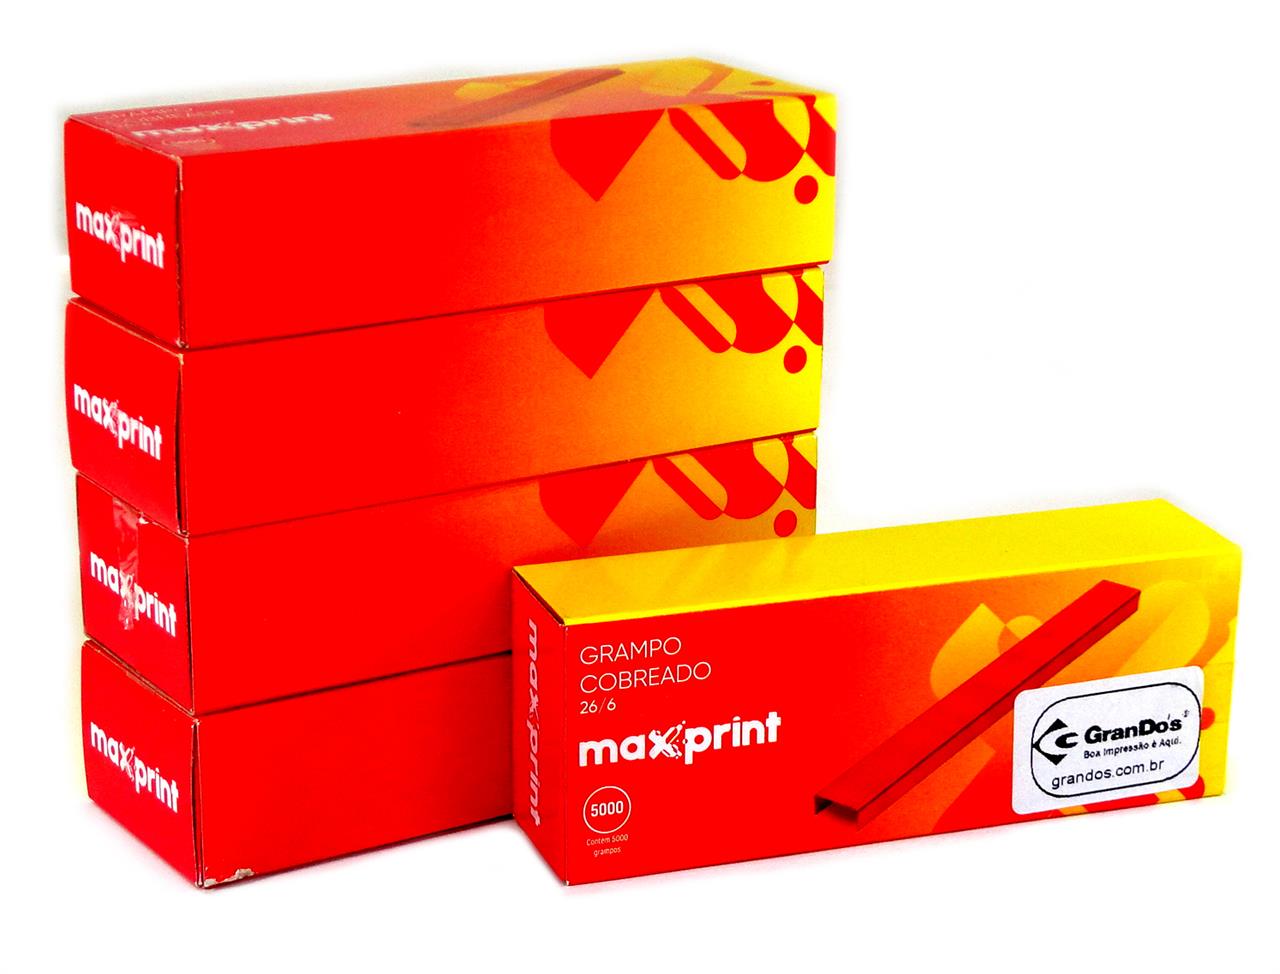 Caneta, Clips, Grampo, Elástico, Cola, Envelope, Durex e Lápis - Grampo 26/6 Cobreado Pack com 5 caixas Maxprint